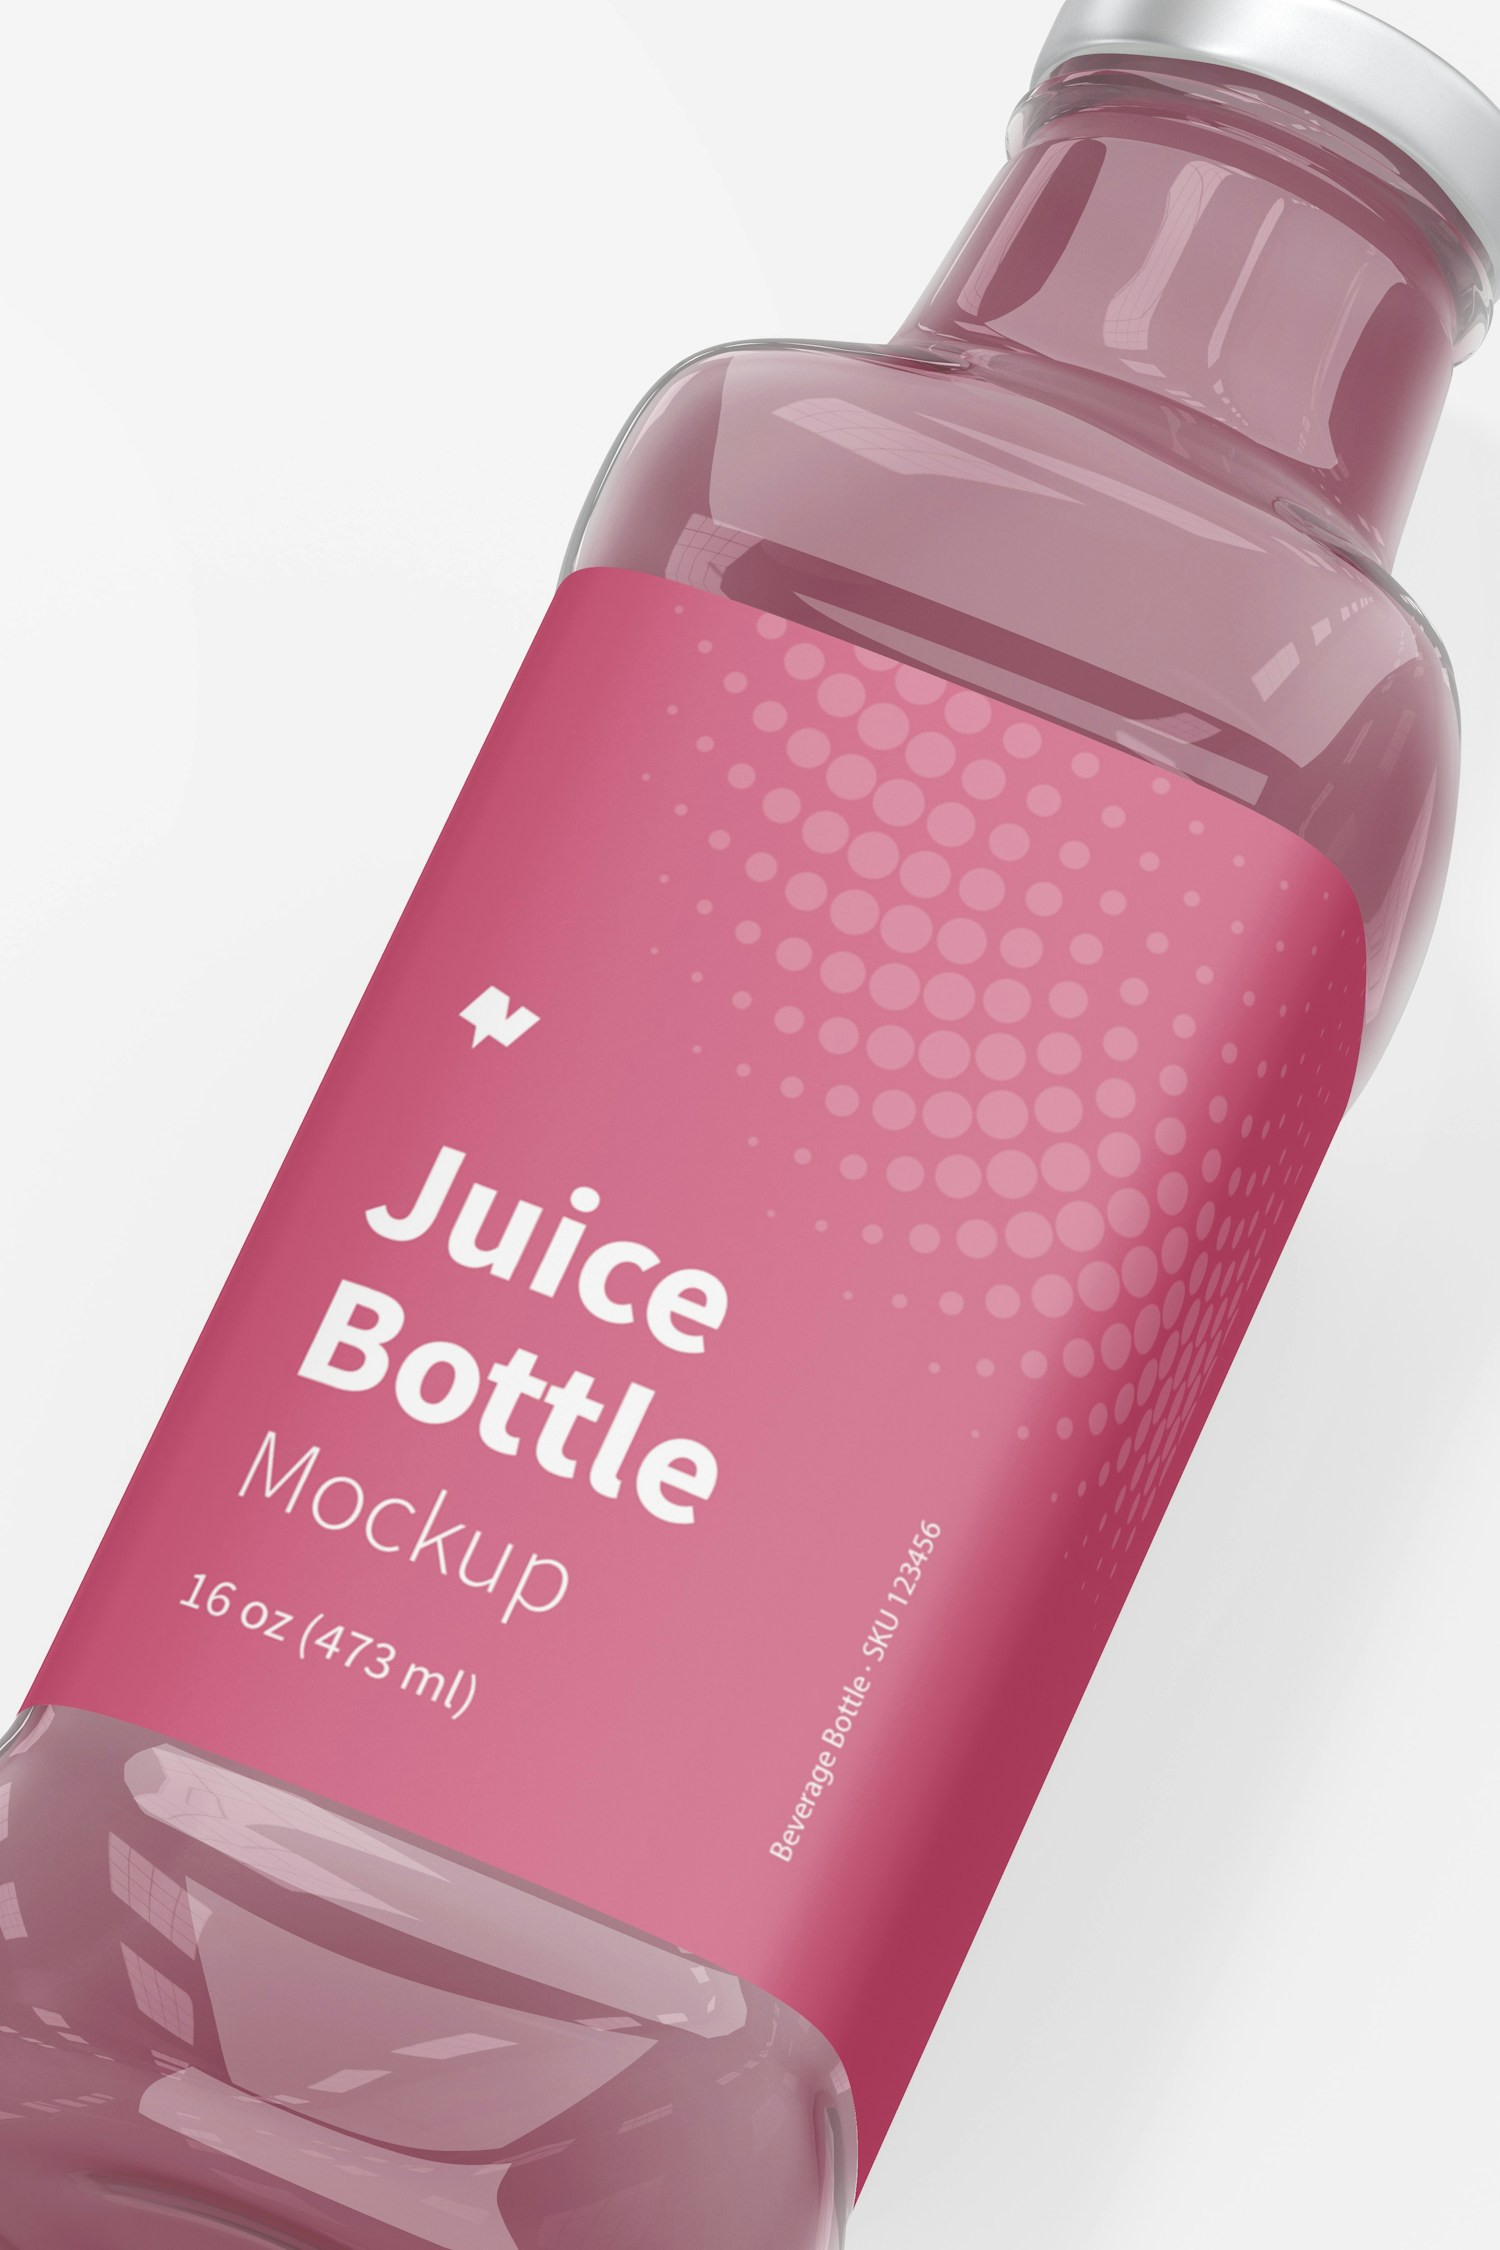 16 oz Glass Juice Bottle Mockup, Close Up